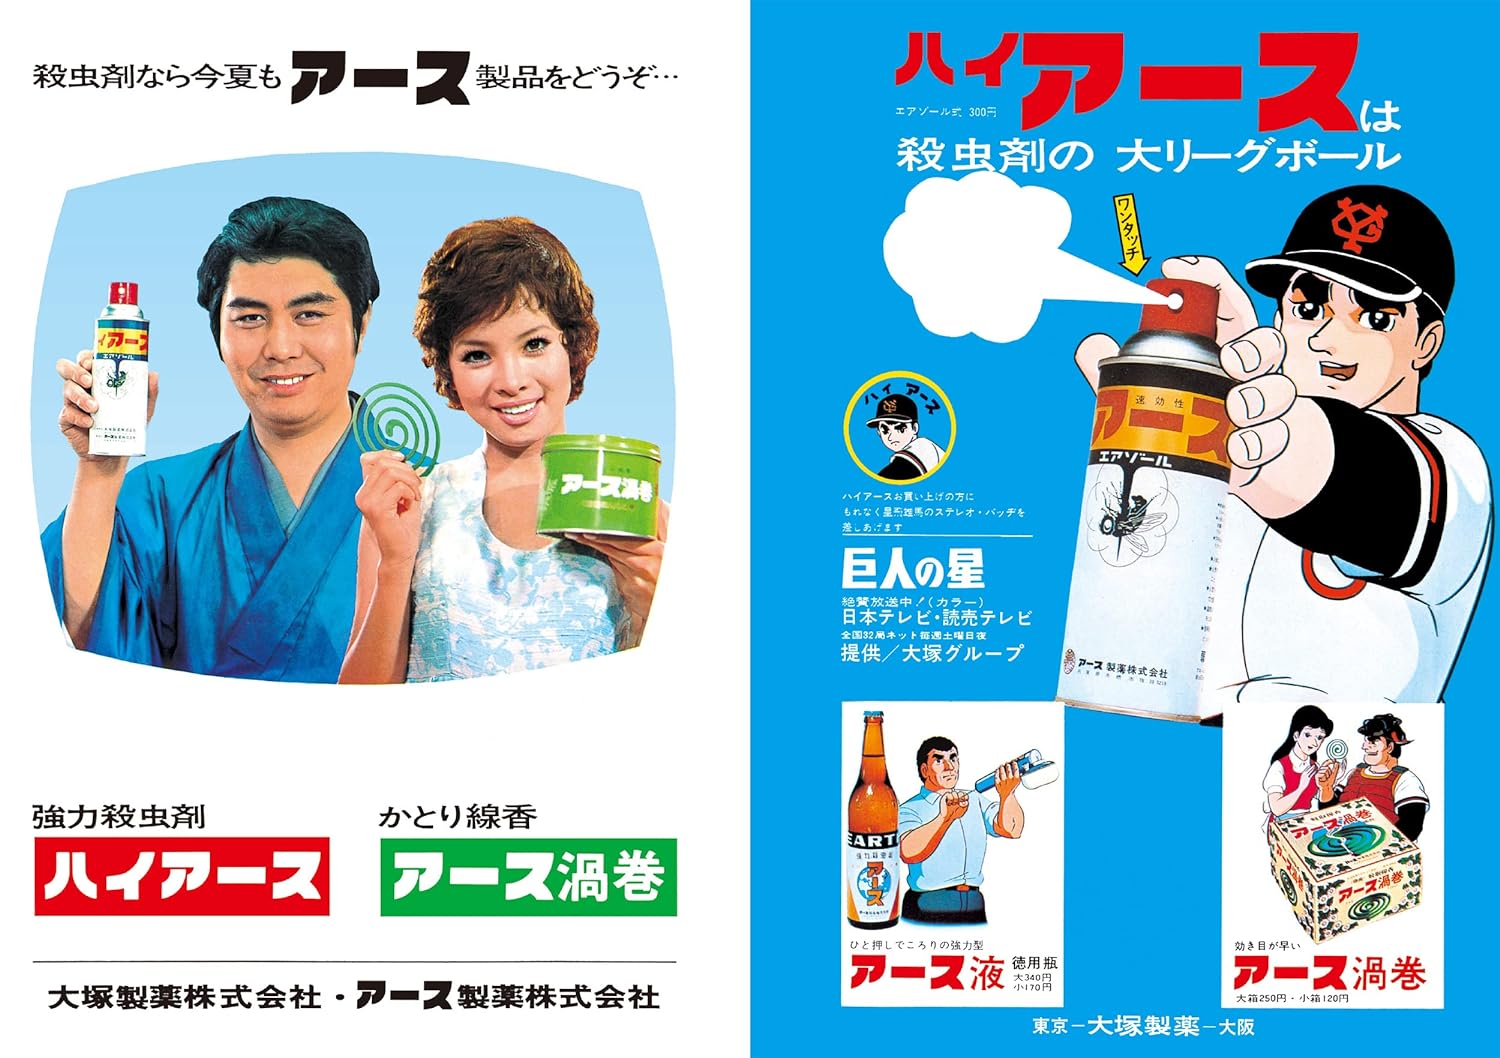 Children's advertisement in the Showa era 2